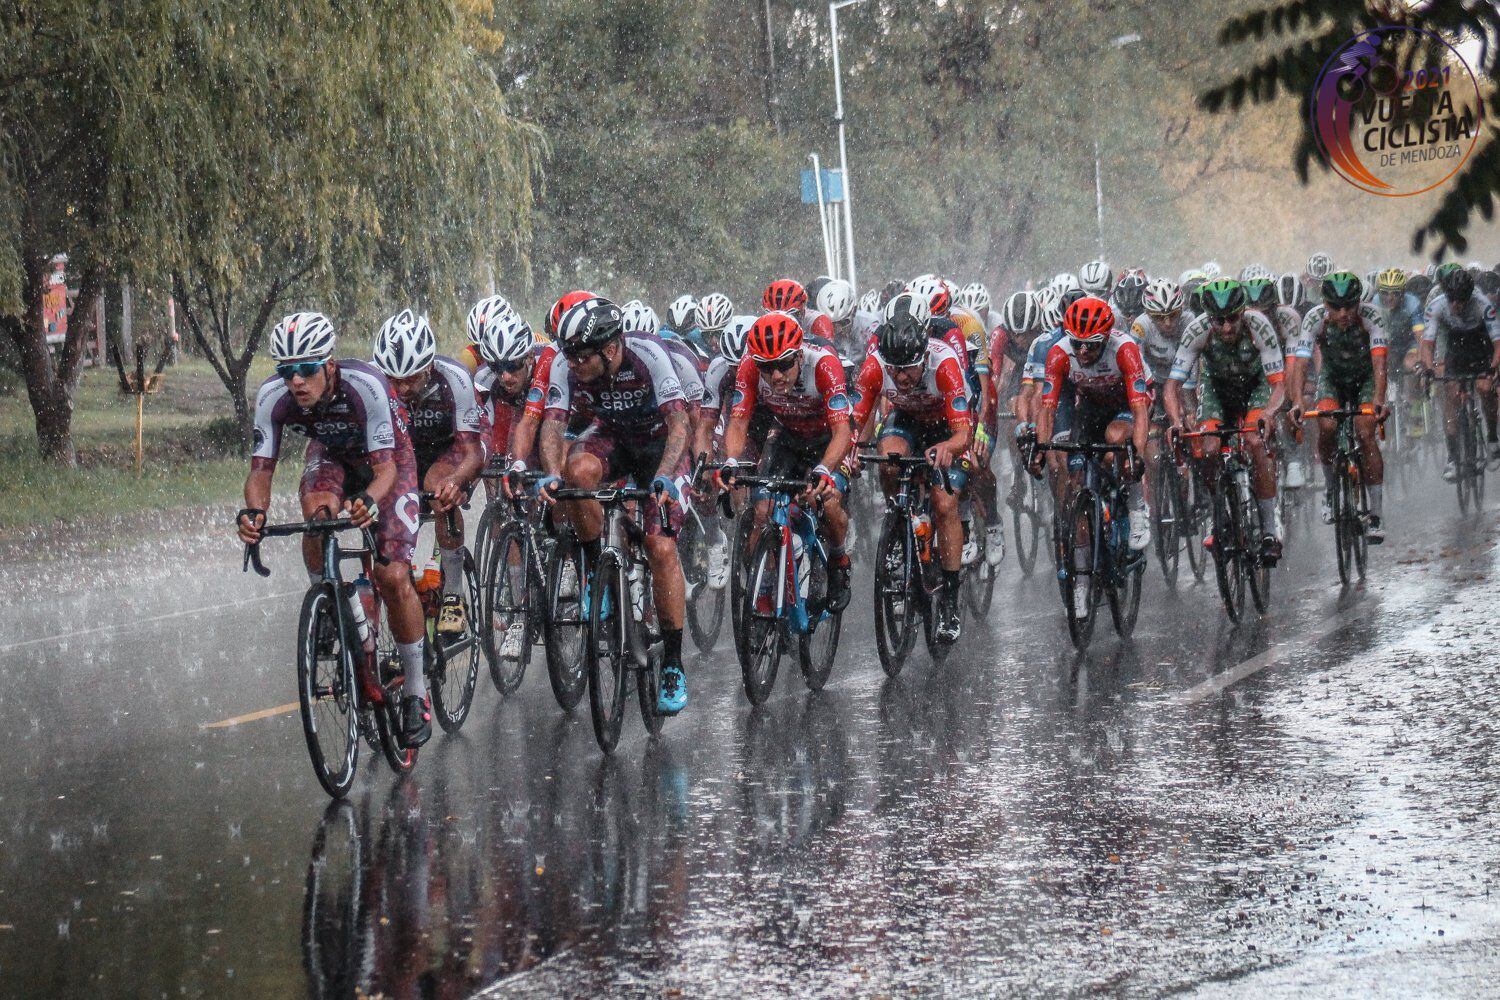 El pelotón pedaleó bajo la lluvia sanrafaelina, en la segunda etapa de la Vuelta de Mendoza.